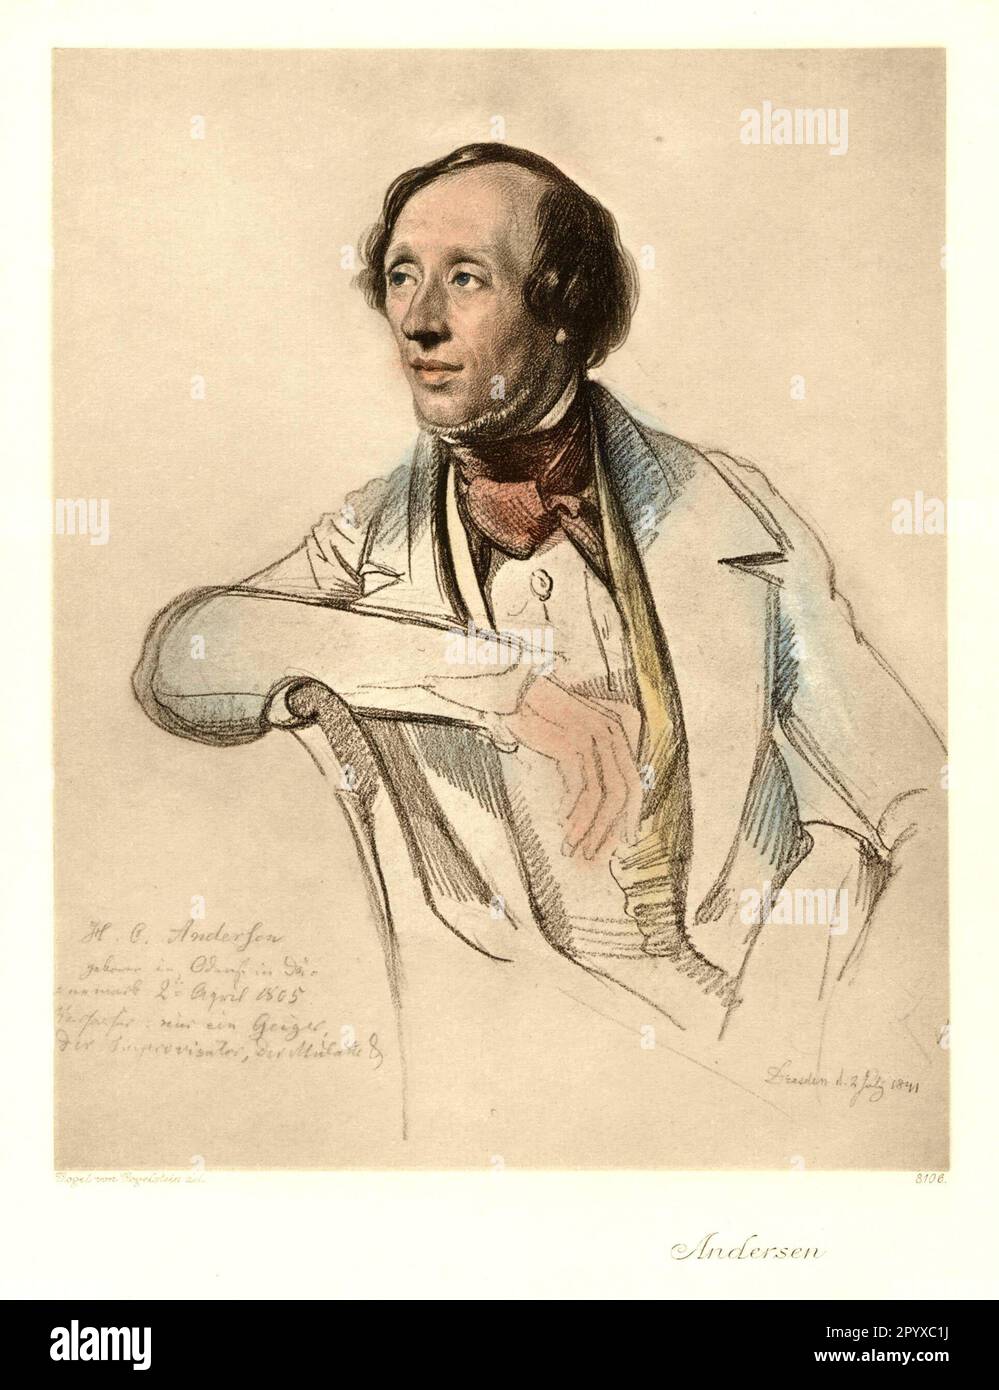 Hans Christian Andersen (1805-1875), scrittore danese. Disegno di Carl Christian Vogel von Vogelstein. Foto: Heliogravure, Corpus Imaginum, Hanfstaengl Collection. [traduzione automatica] Foto Stock